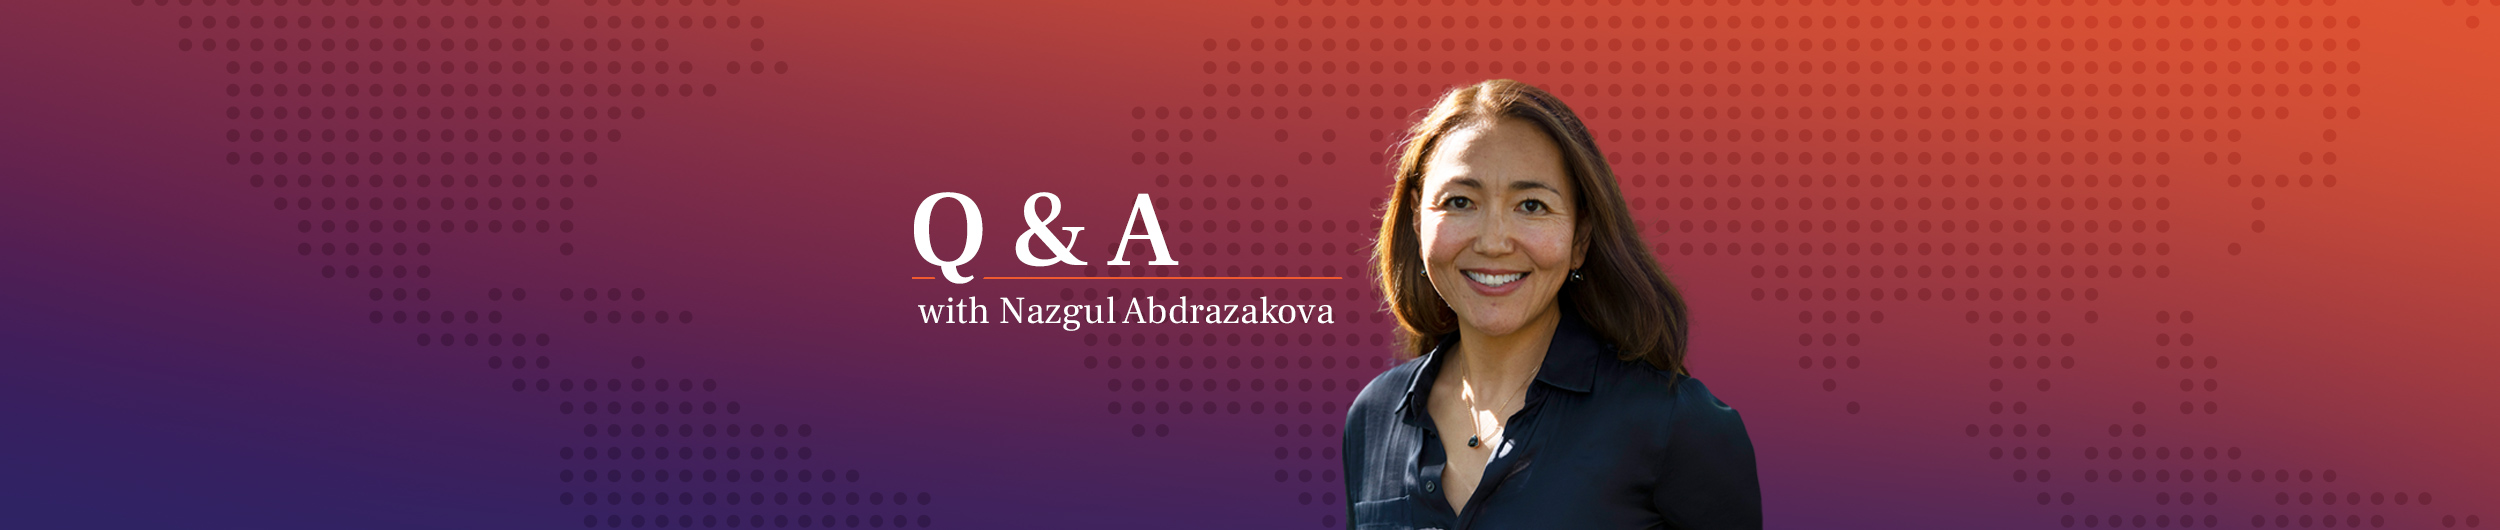 Resonance CEO Nazgul Abdrazakova on Being a Woman Leader in 2021 (Q&A)